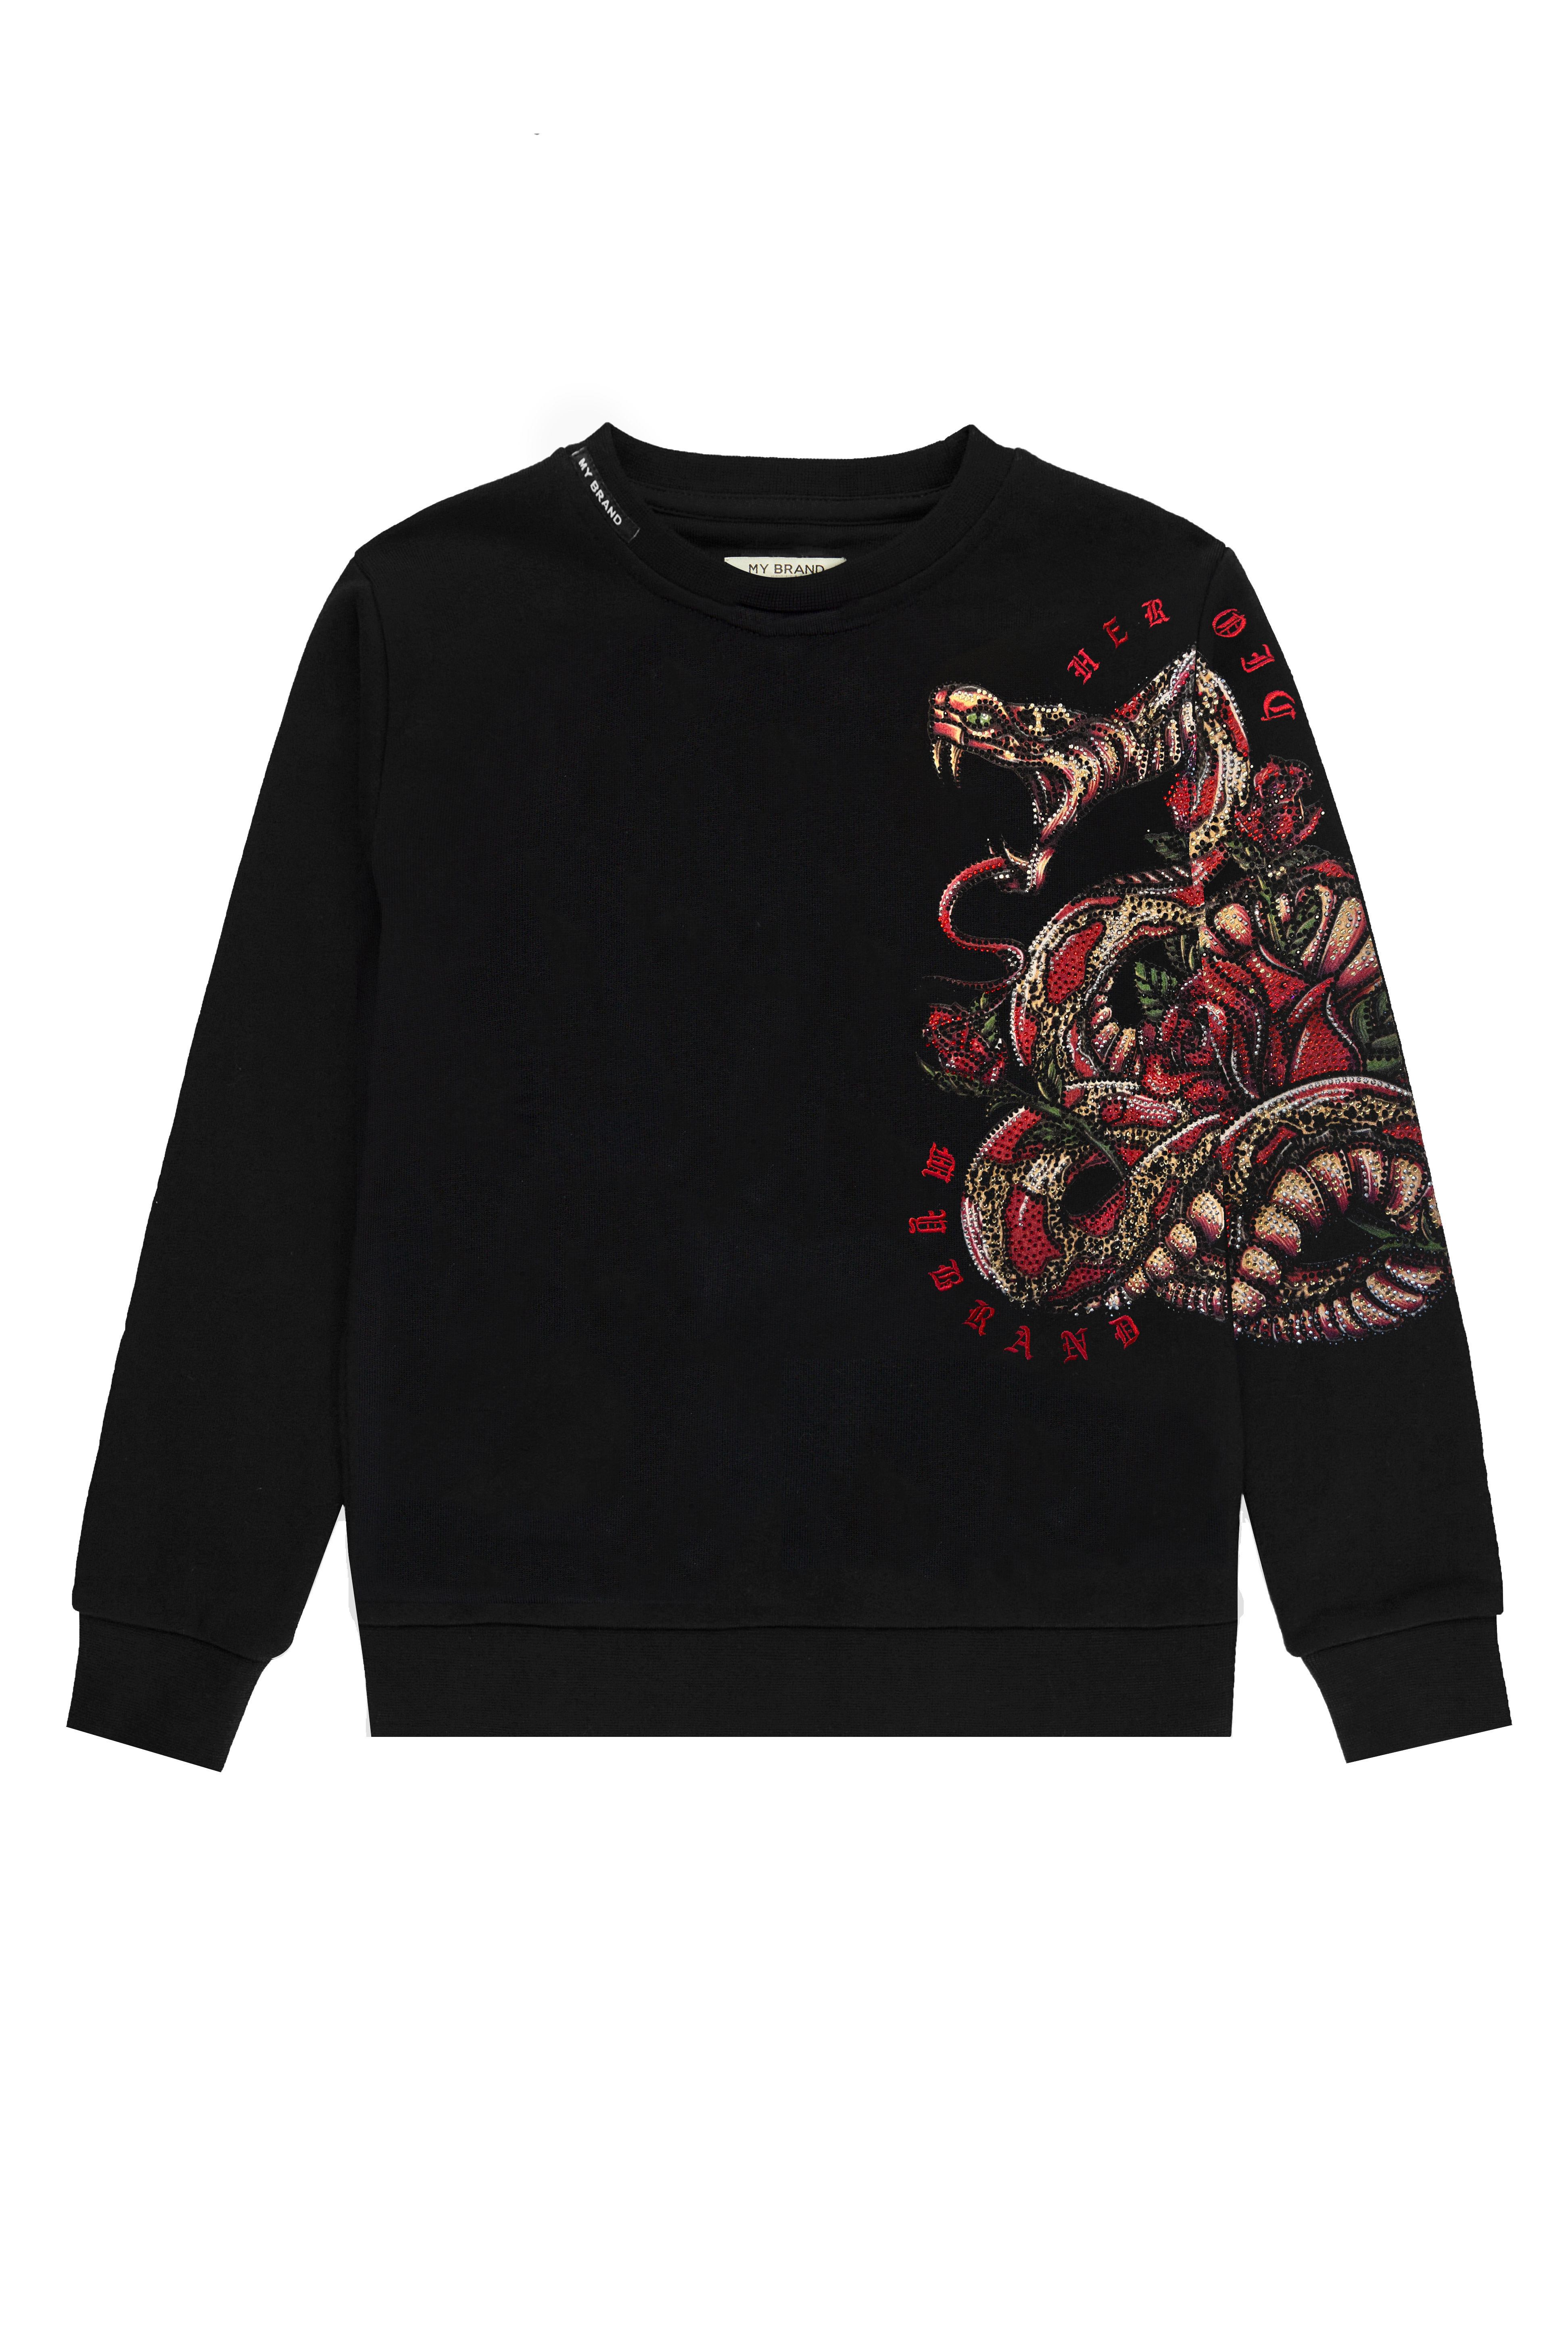 Snake Rose Sweater Black